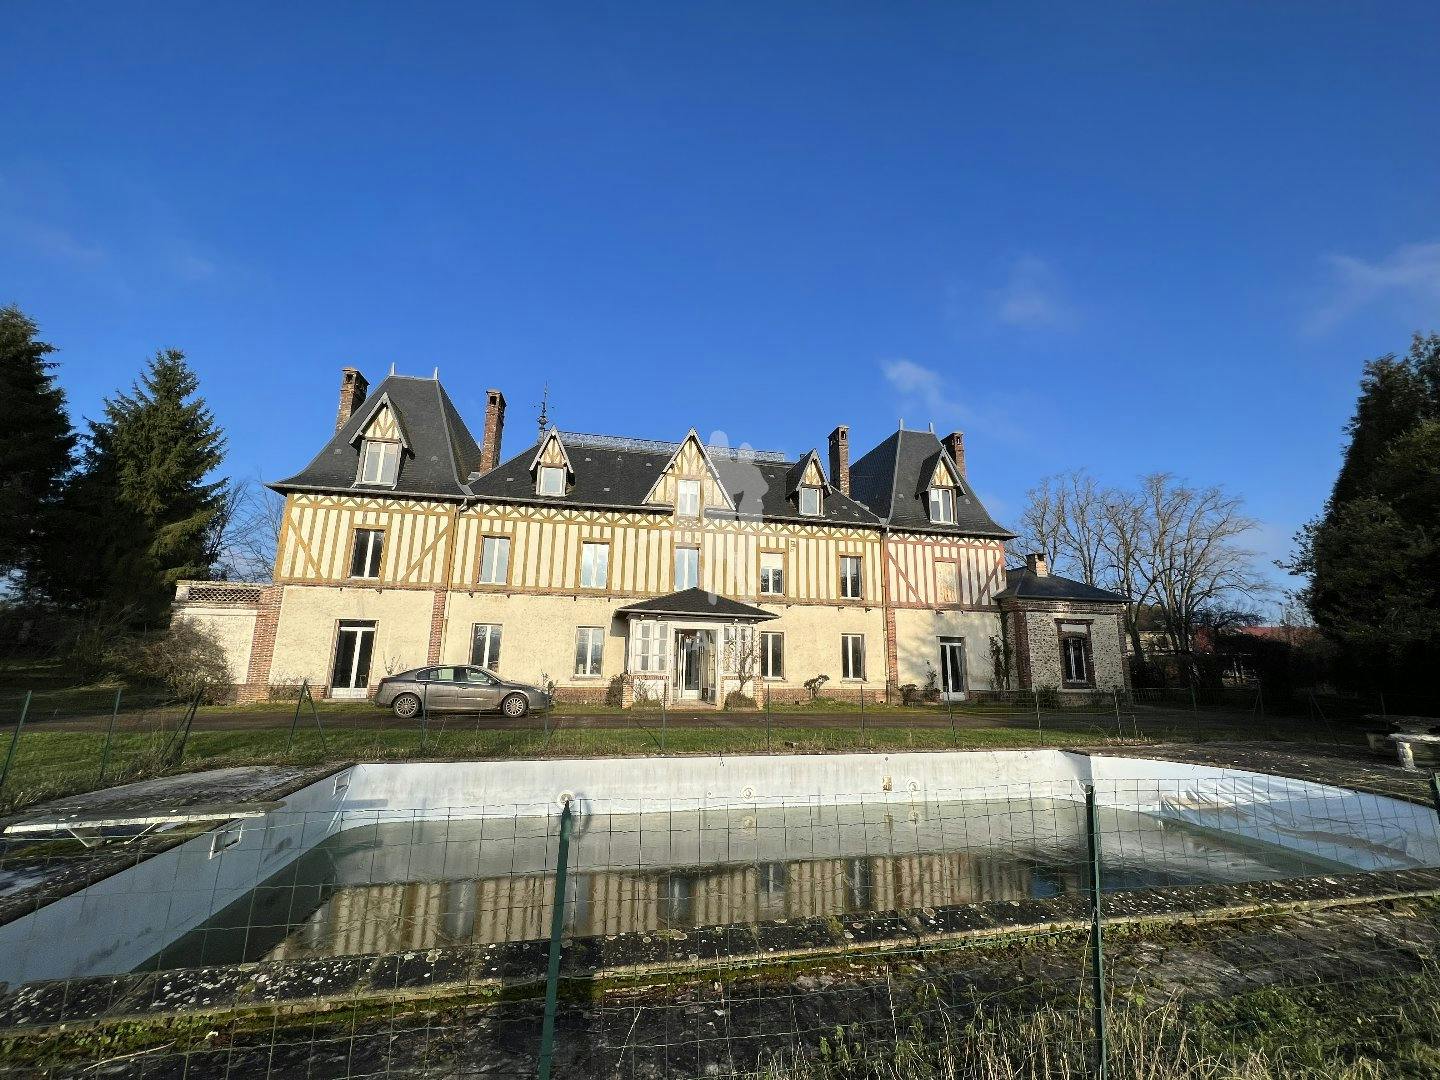 A vendre , Rugles ( Eure ) , chateau 646 m2 habitables ,  18 pieces , terrain 8,7 hectares 